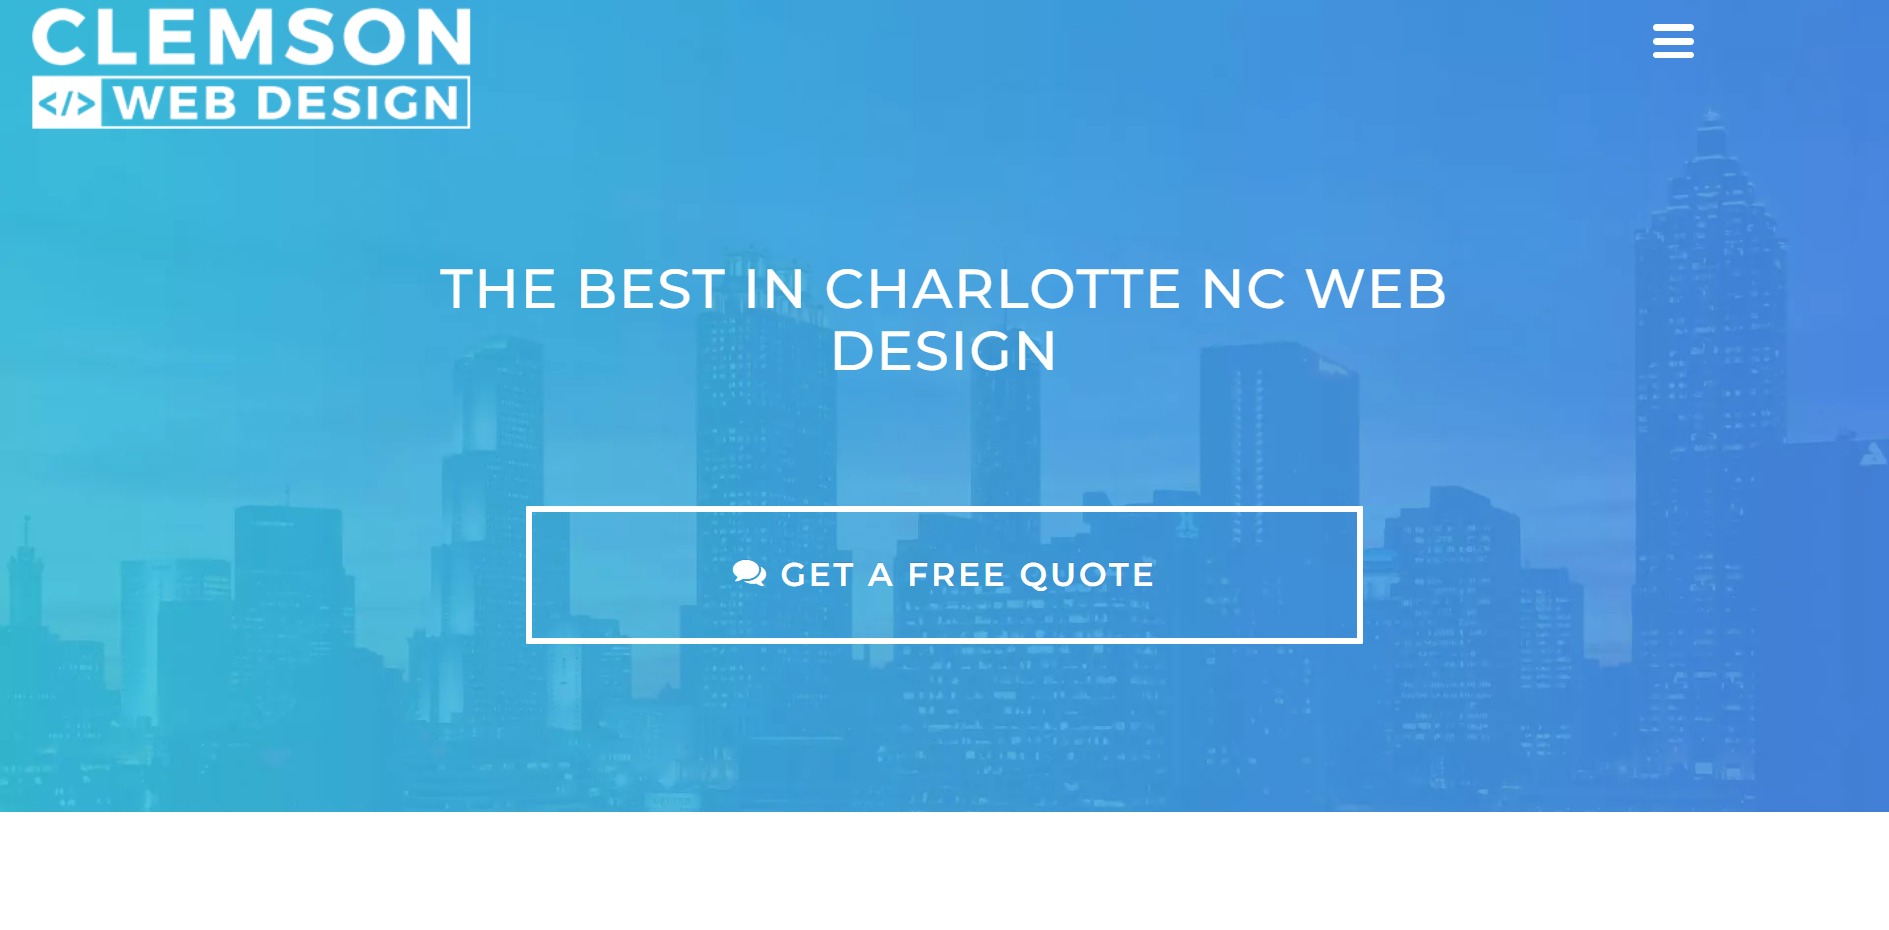 Clemson Web Design